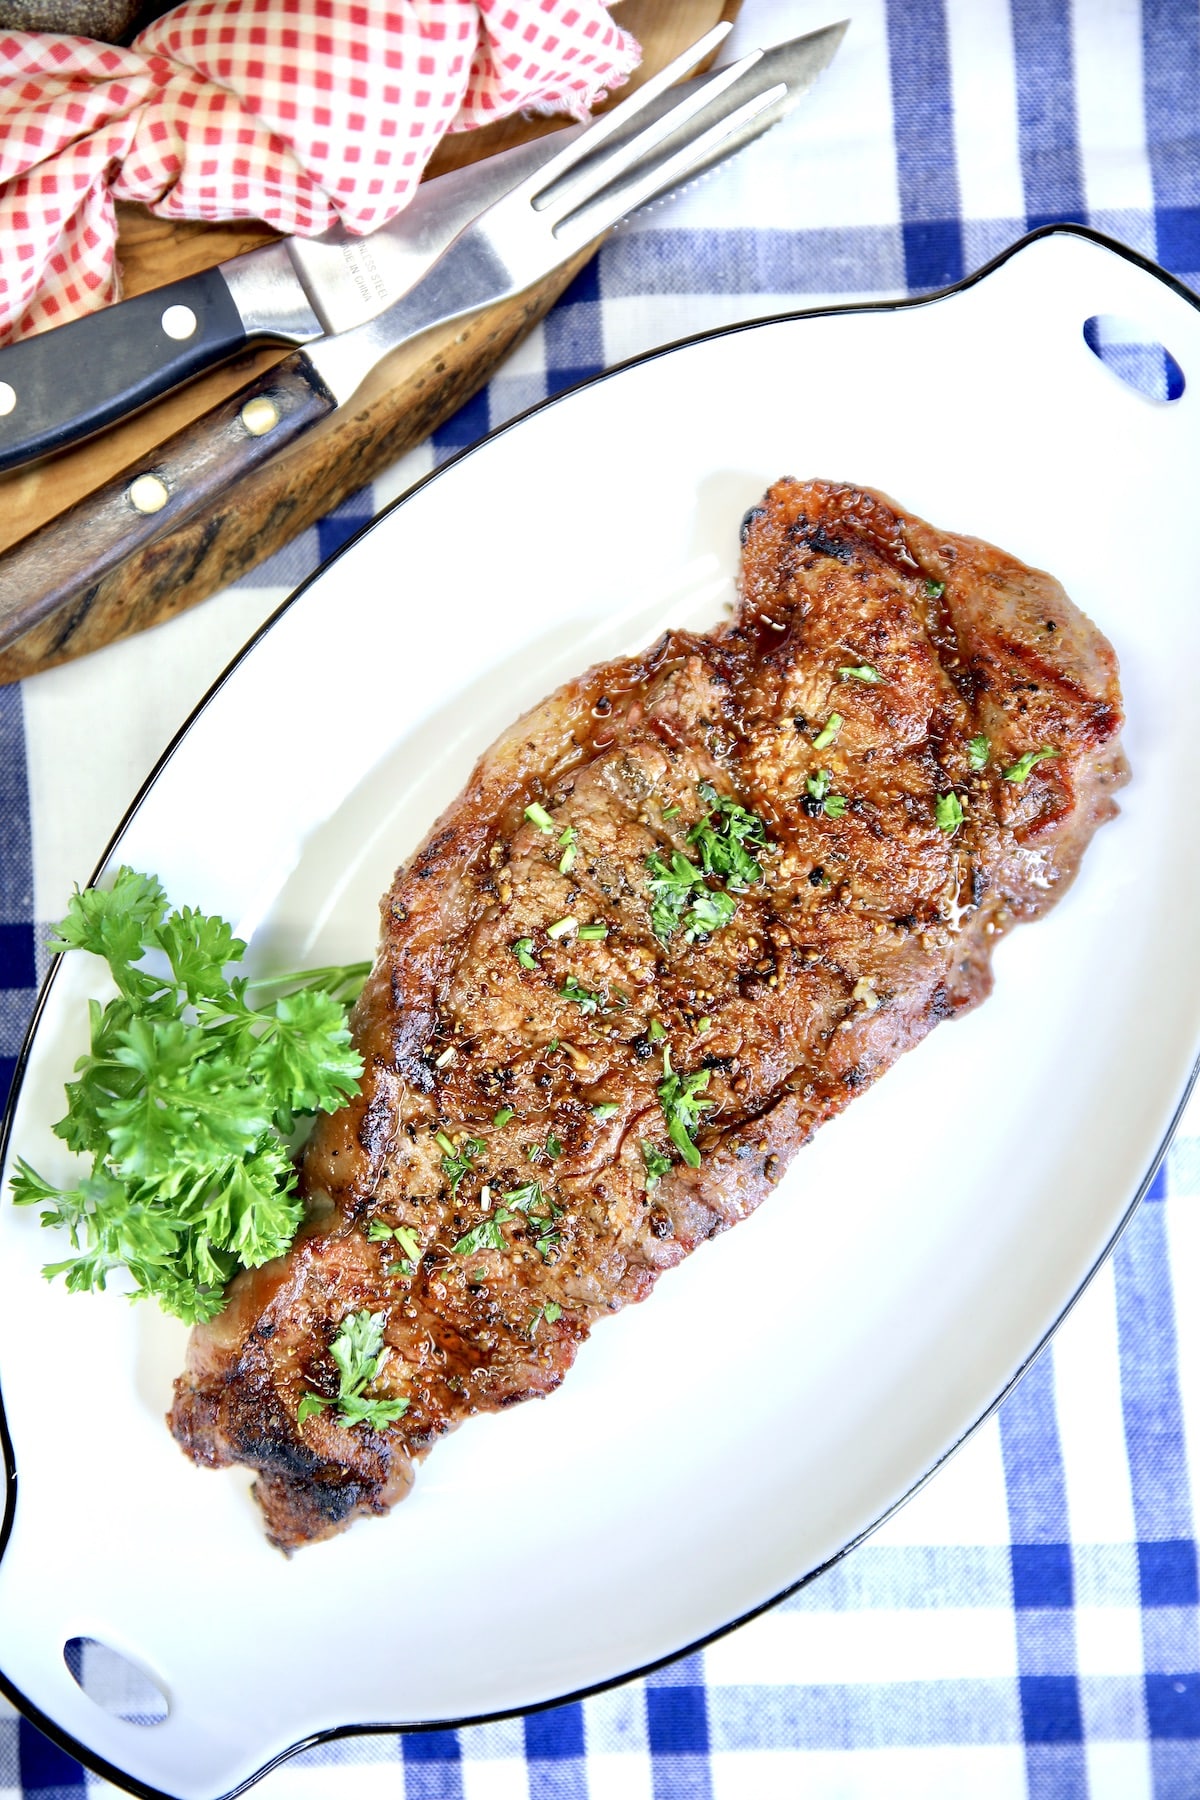 Platter with grilled strip steak, parsley.